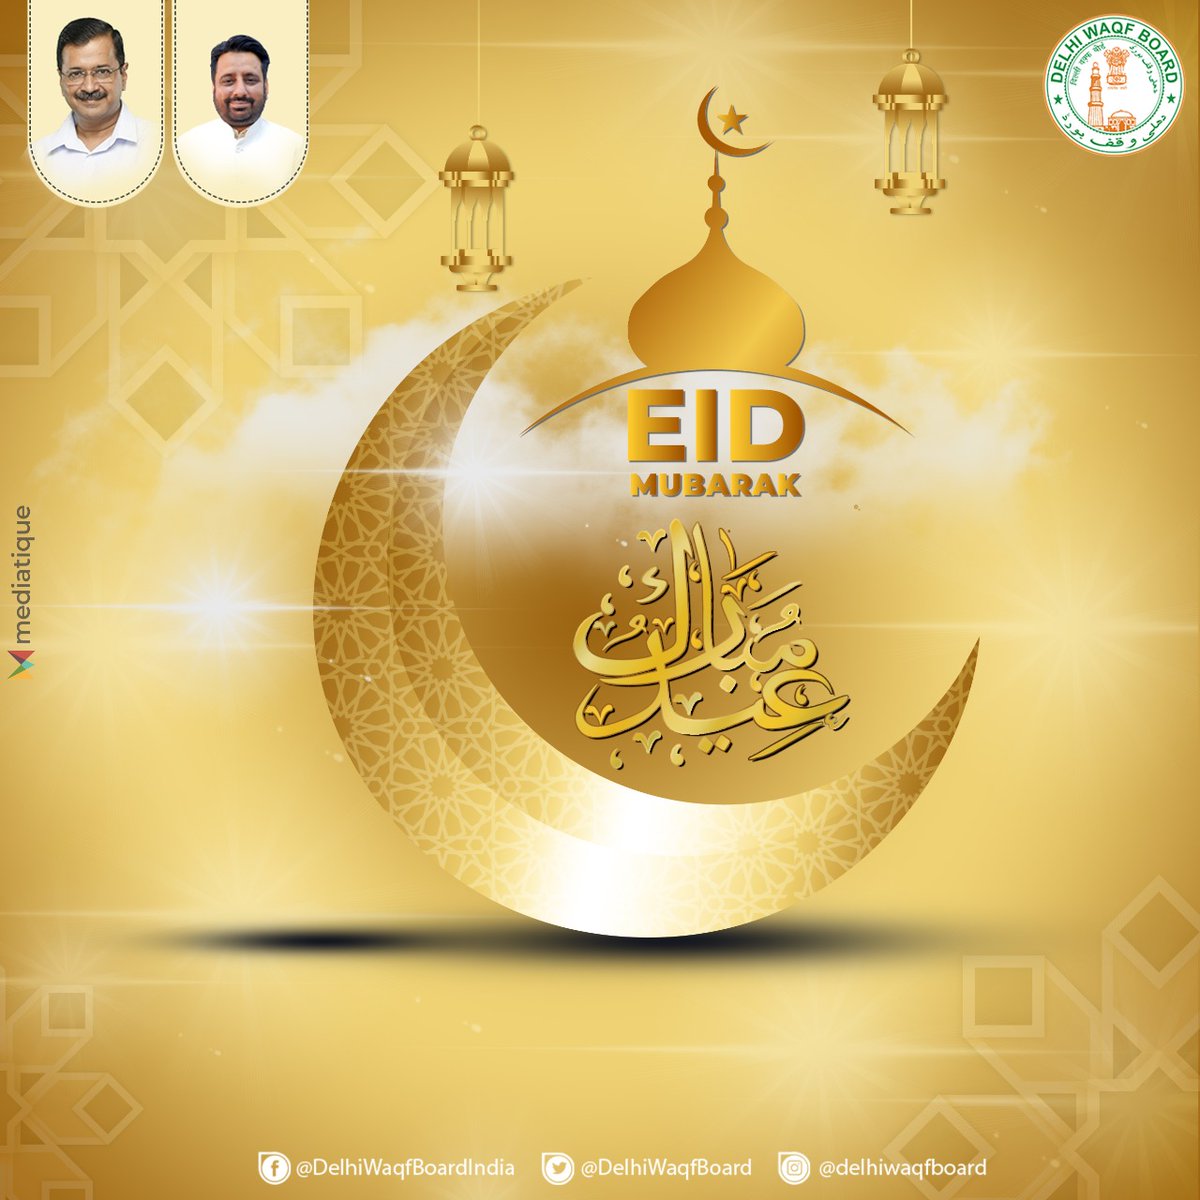 ईद-उल-फ़ितर मुबारक Eid-Al-Fitr Mubarak #EidMubarak